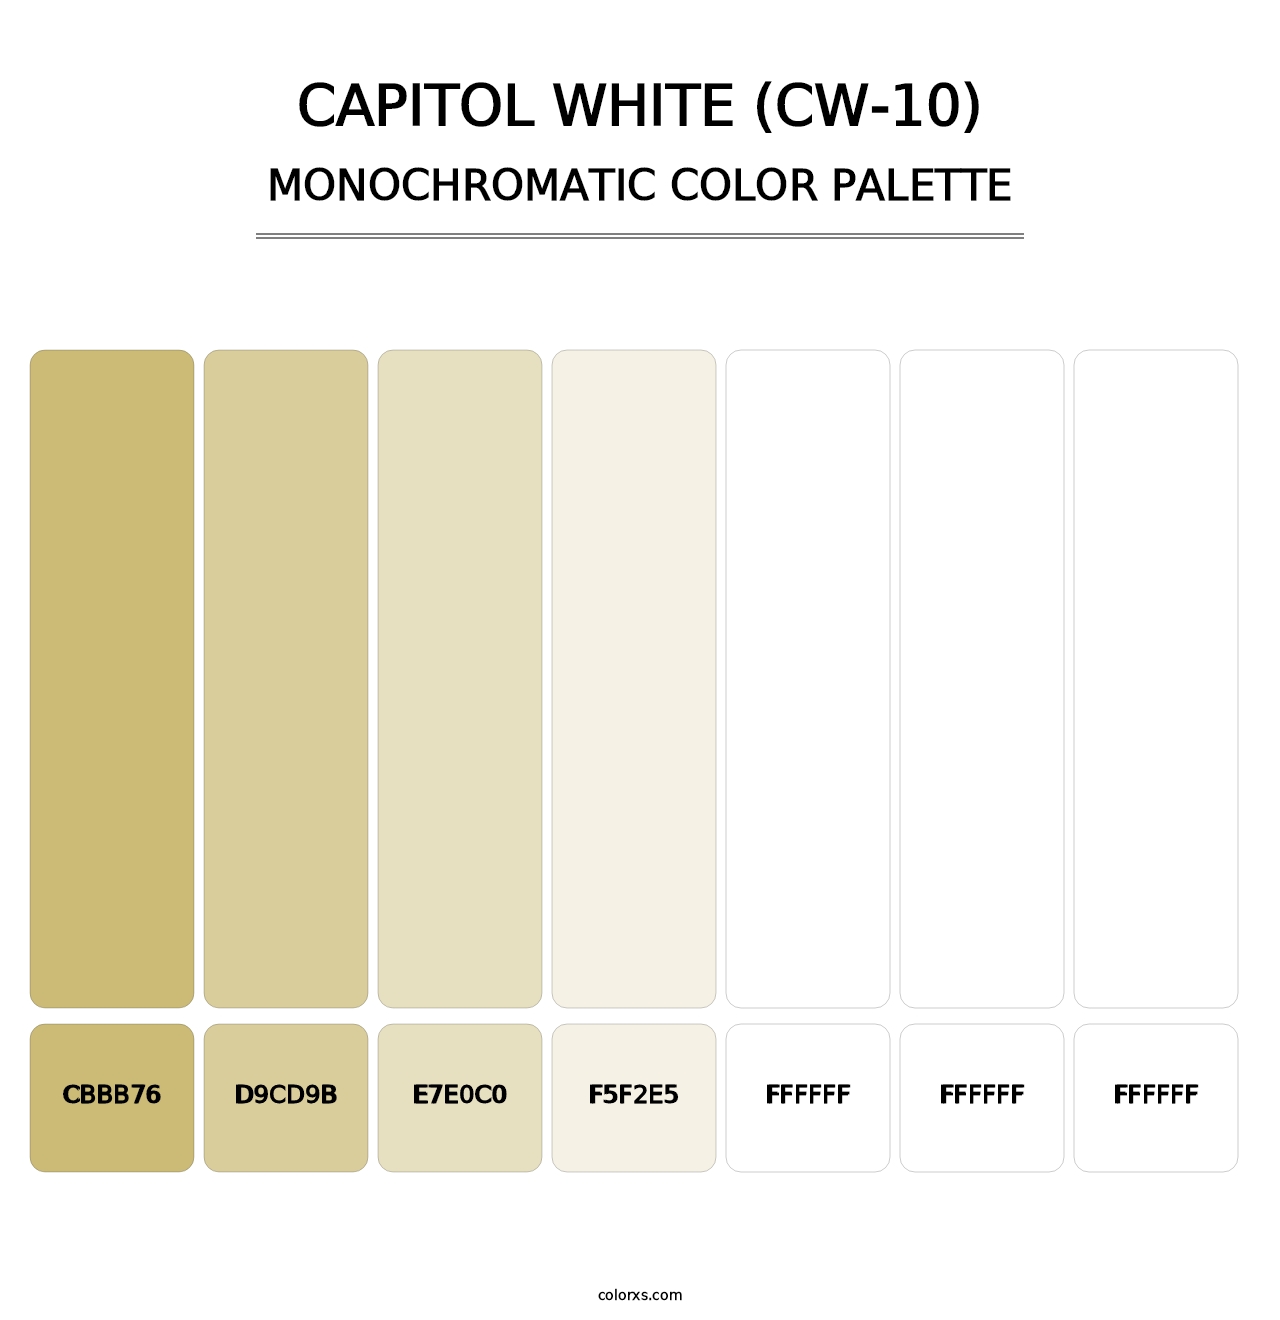 Capitol White (CW-10) - Monochromatic Color Palette